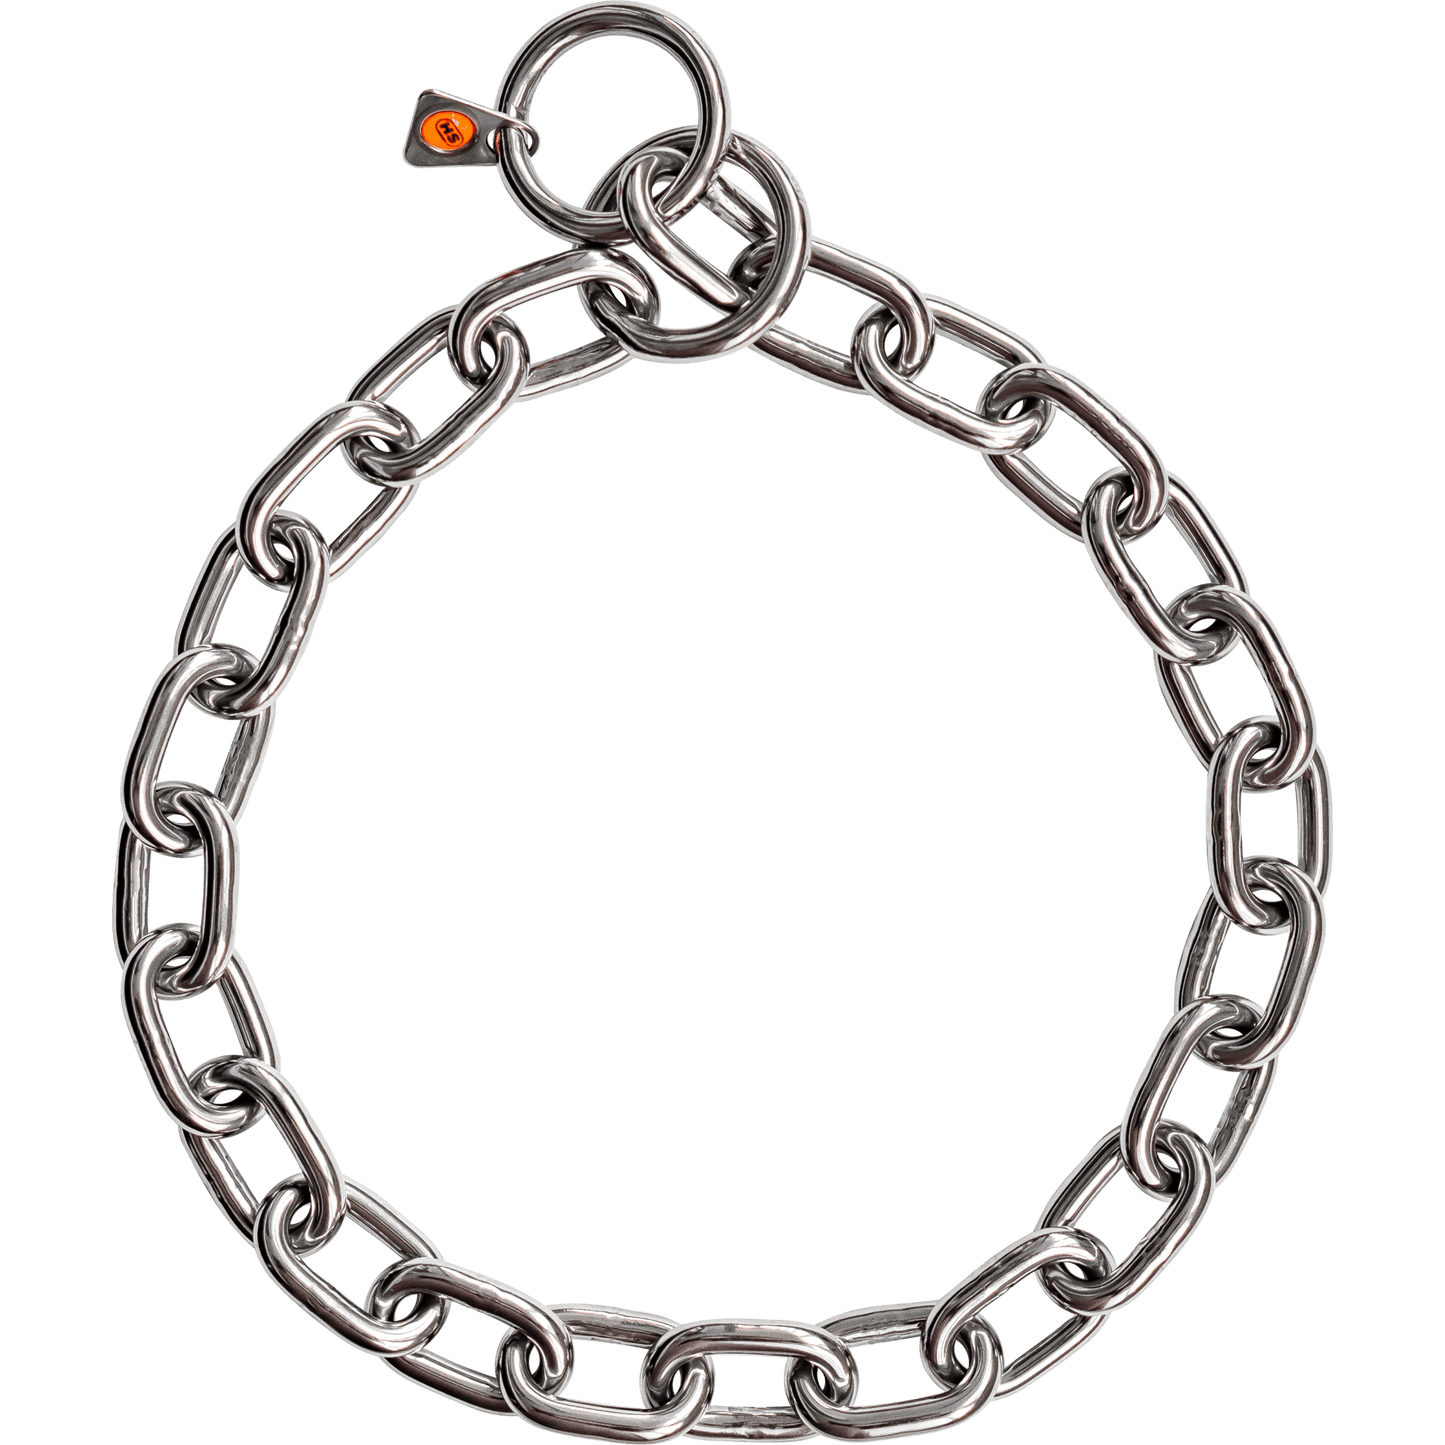 Herm Sprenger - Extra Strong Collar - Medium Links - Stainless Steel, 5 mm